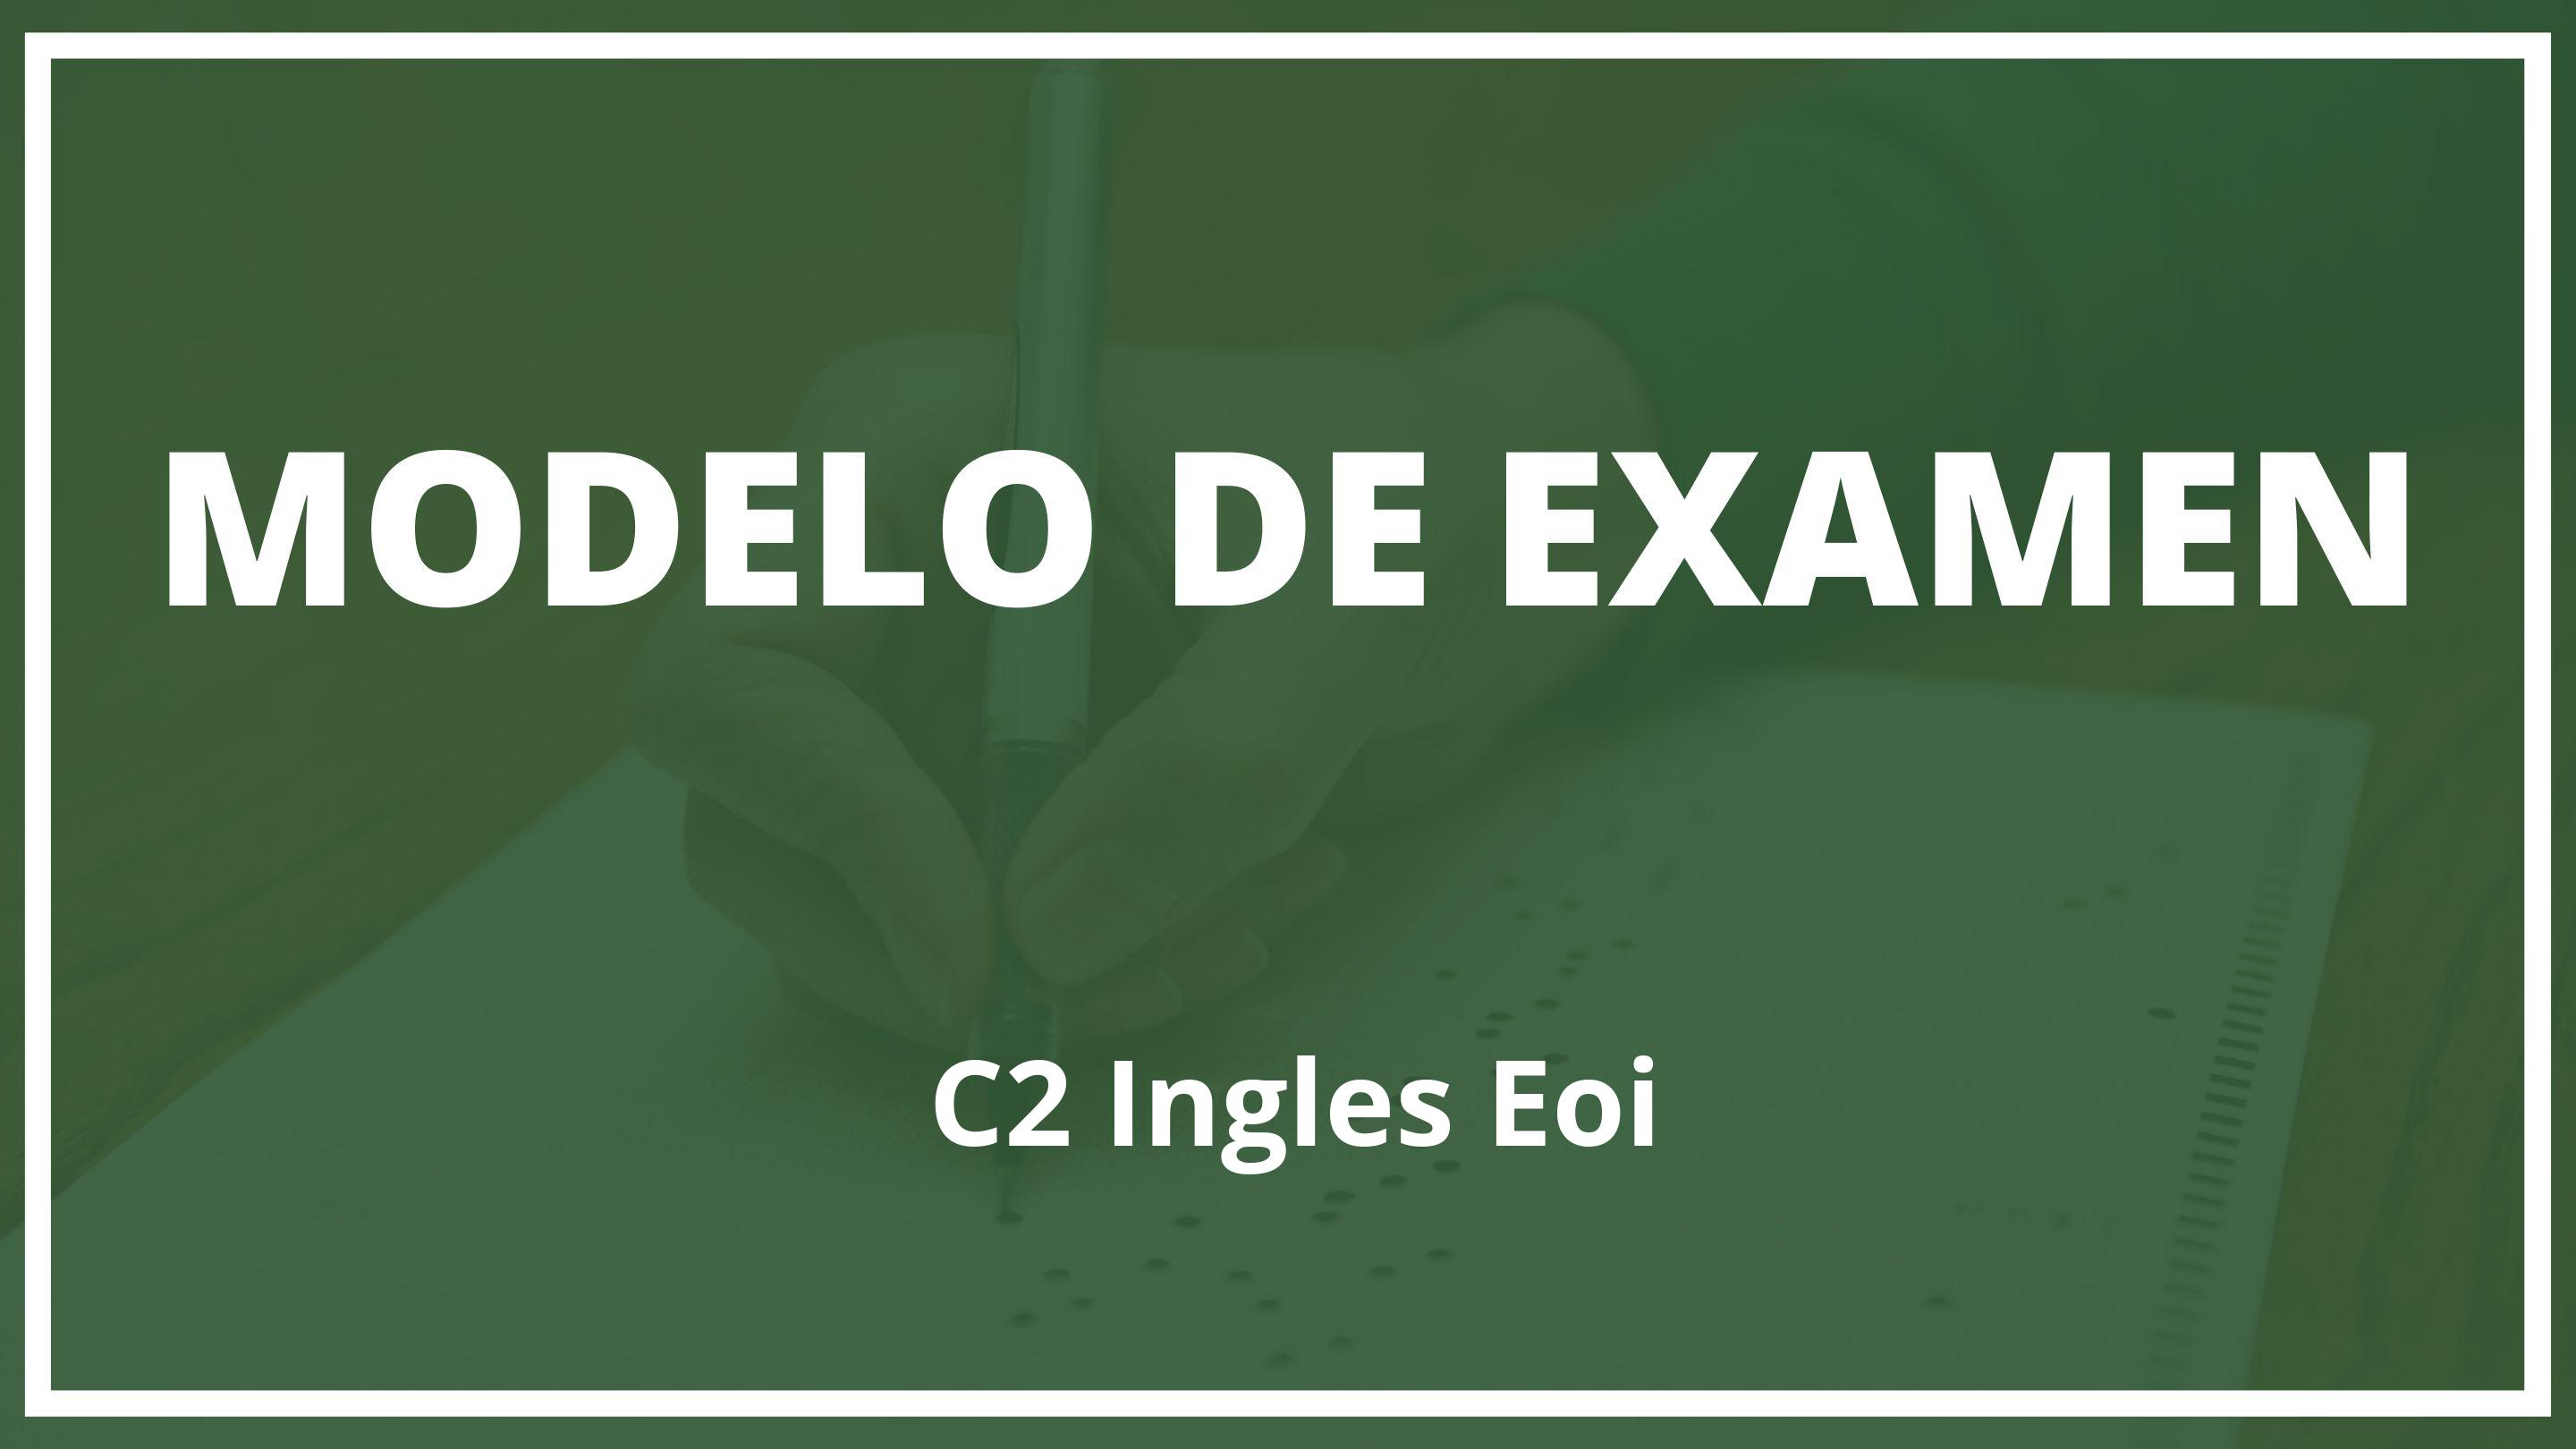 Examen C2 Ingles Eoi